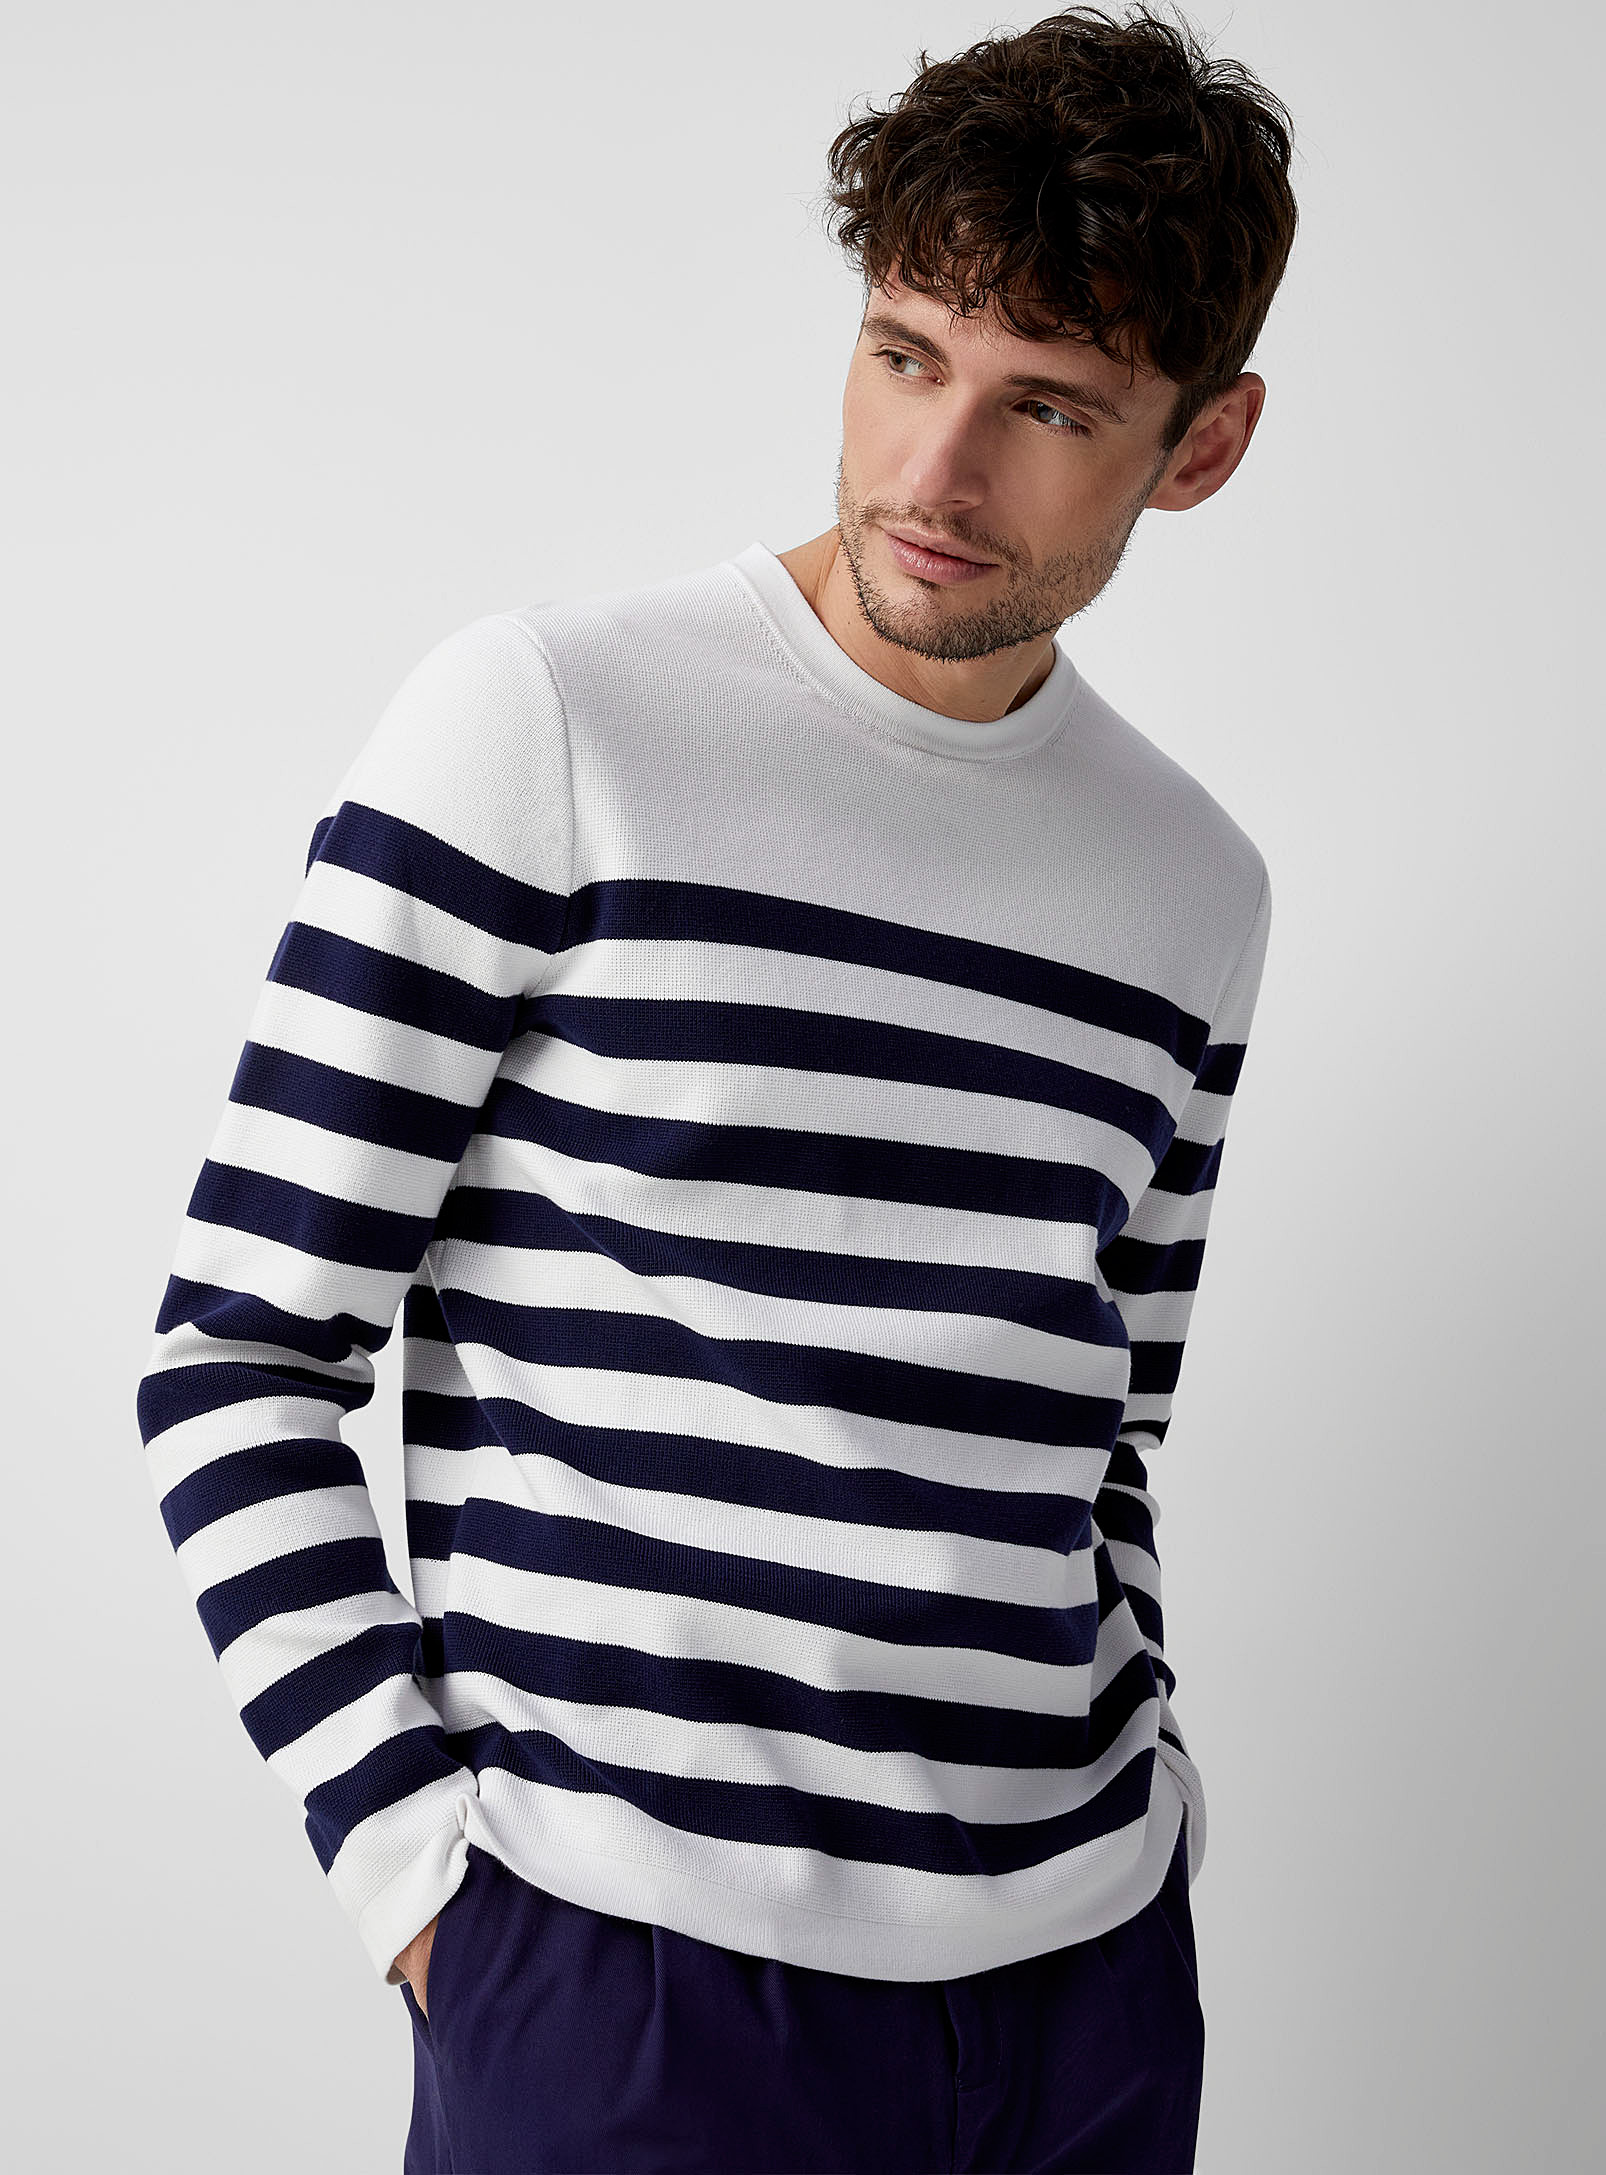 Michael Kors Coastal Stripe Sweater In Marine Blue